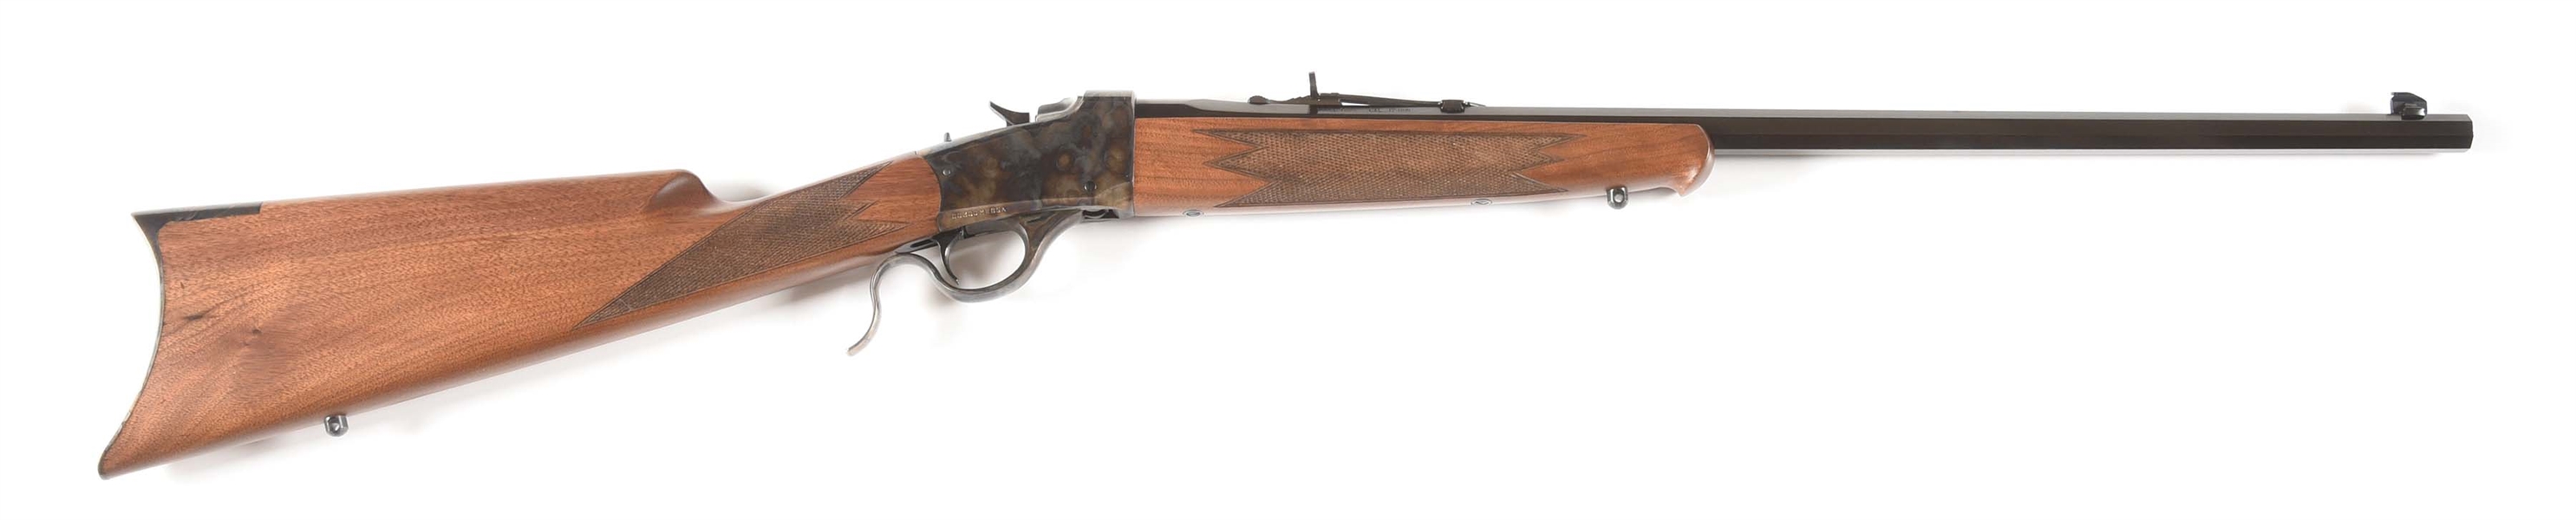 (M) WINCHESTER MODEL 1885 SINGLE SHOT RIFLE IN .17 HMR. 